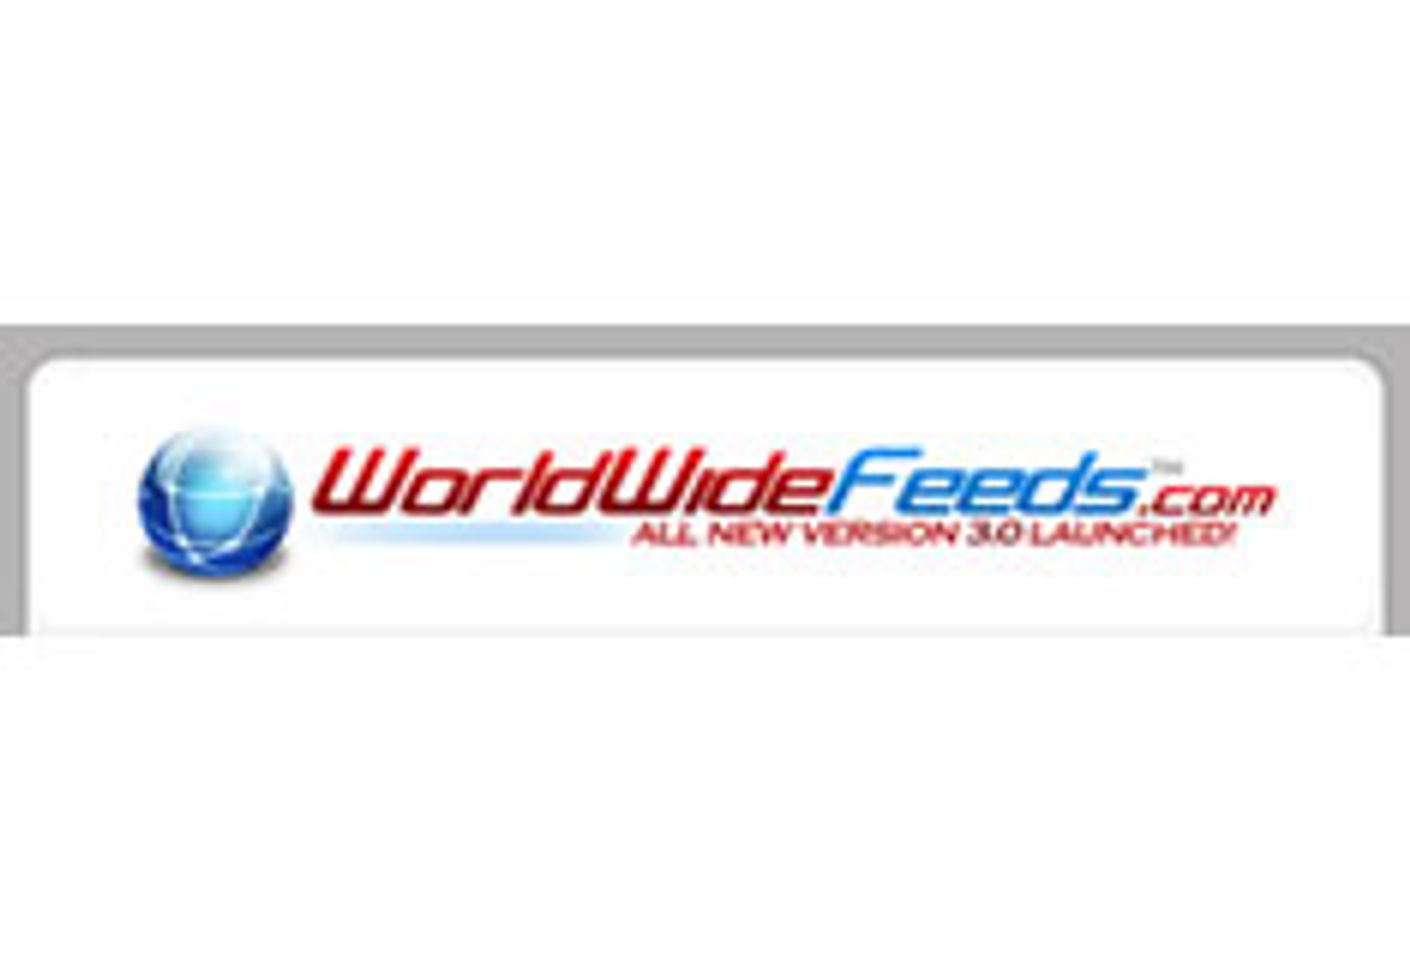 Worldwide Feeds Under New Ownership